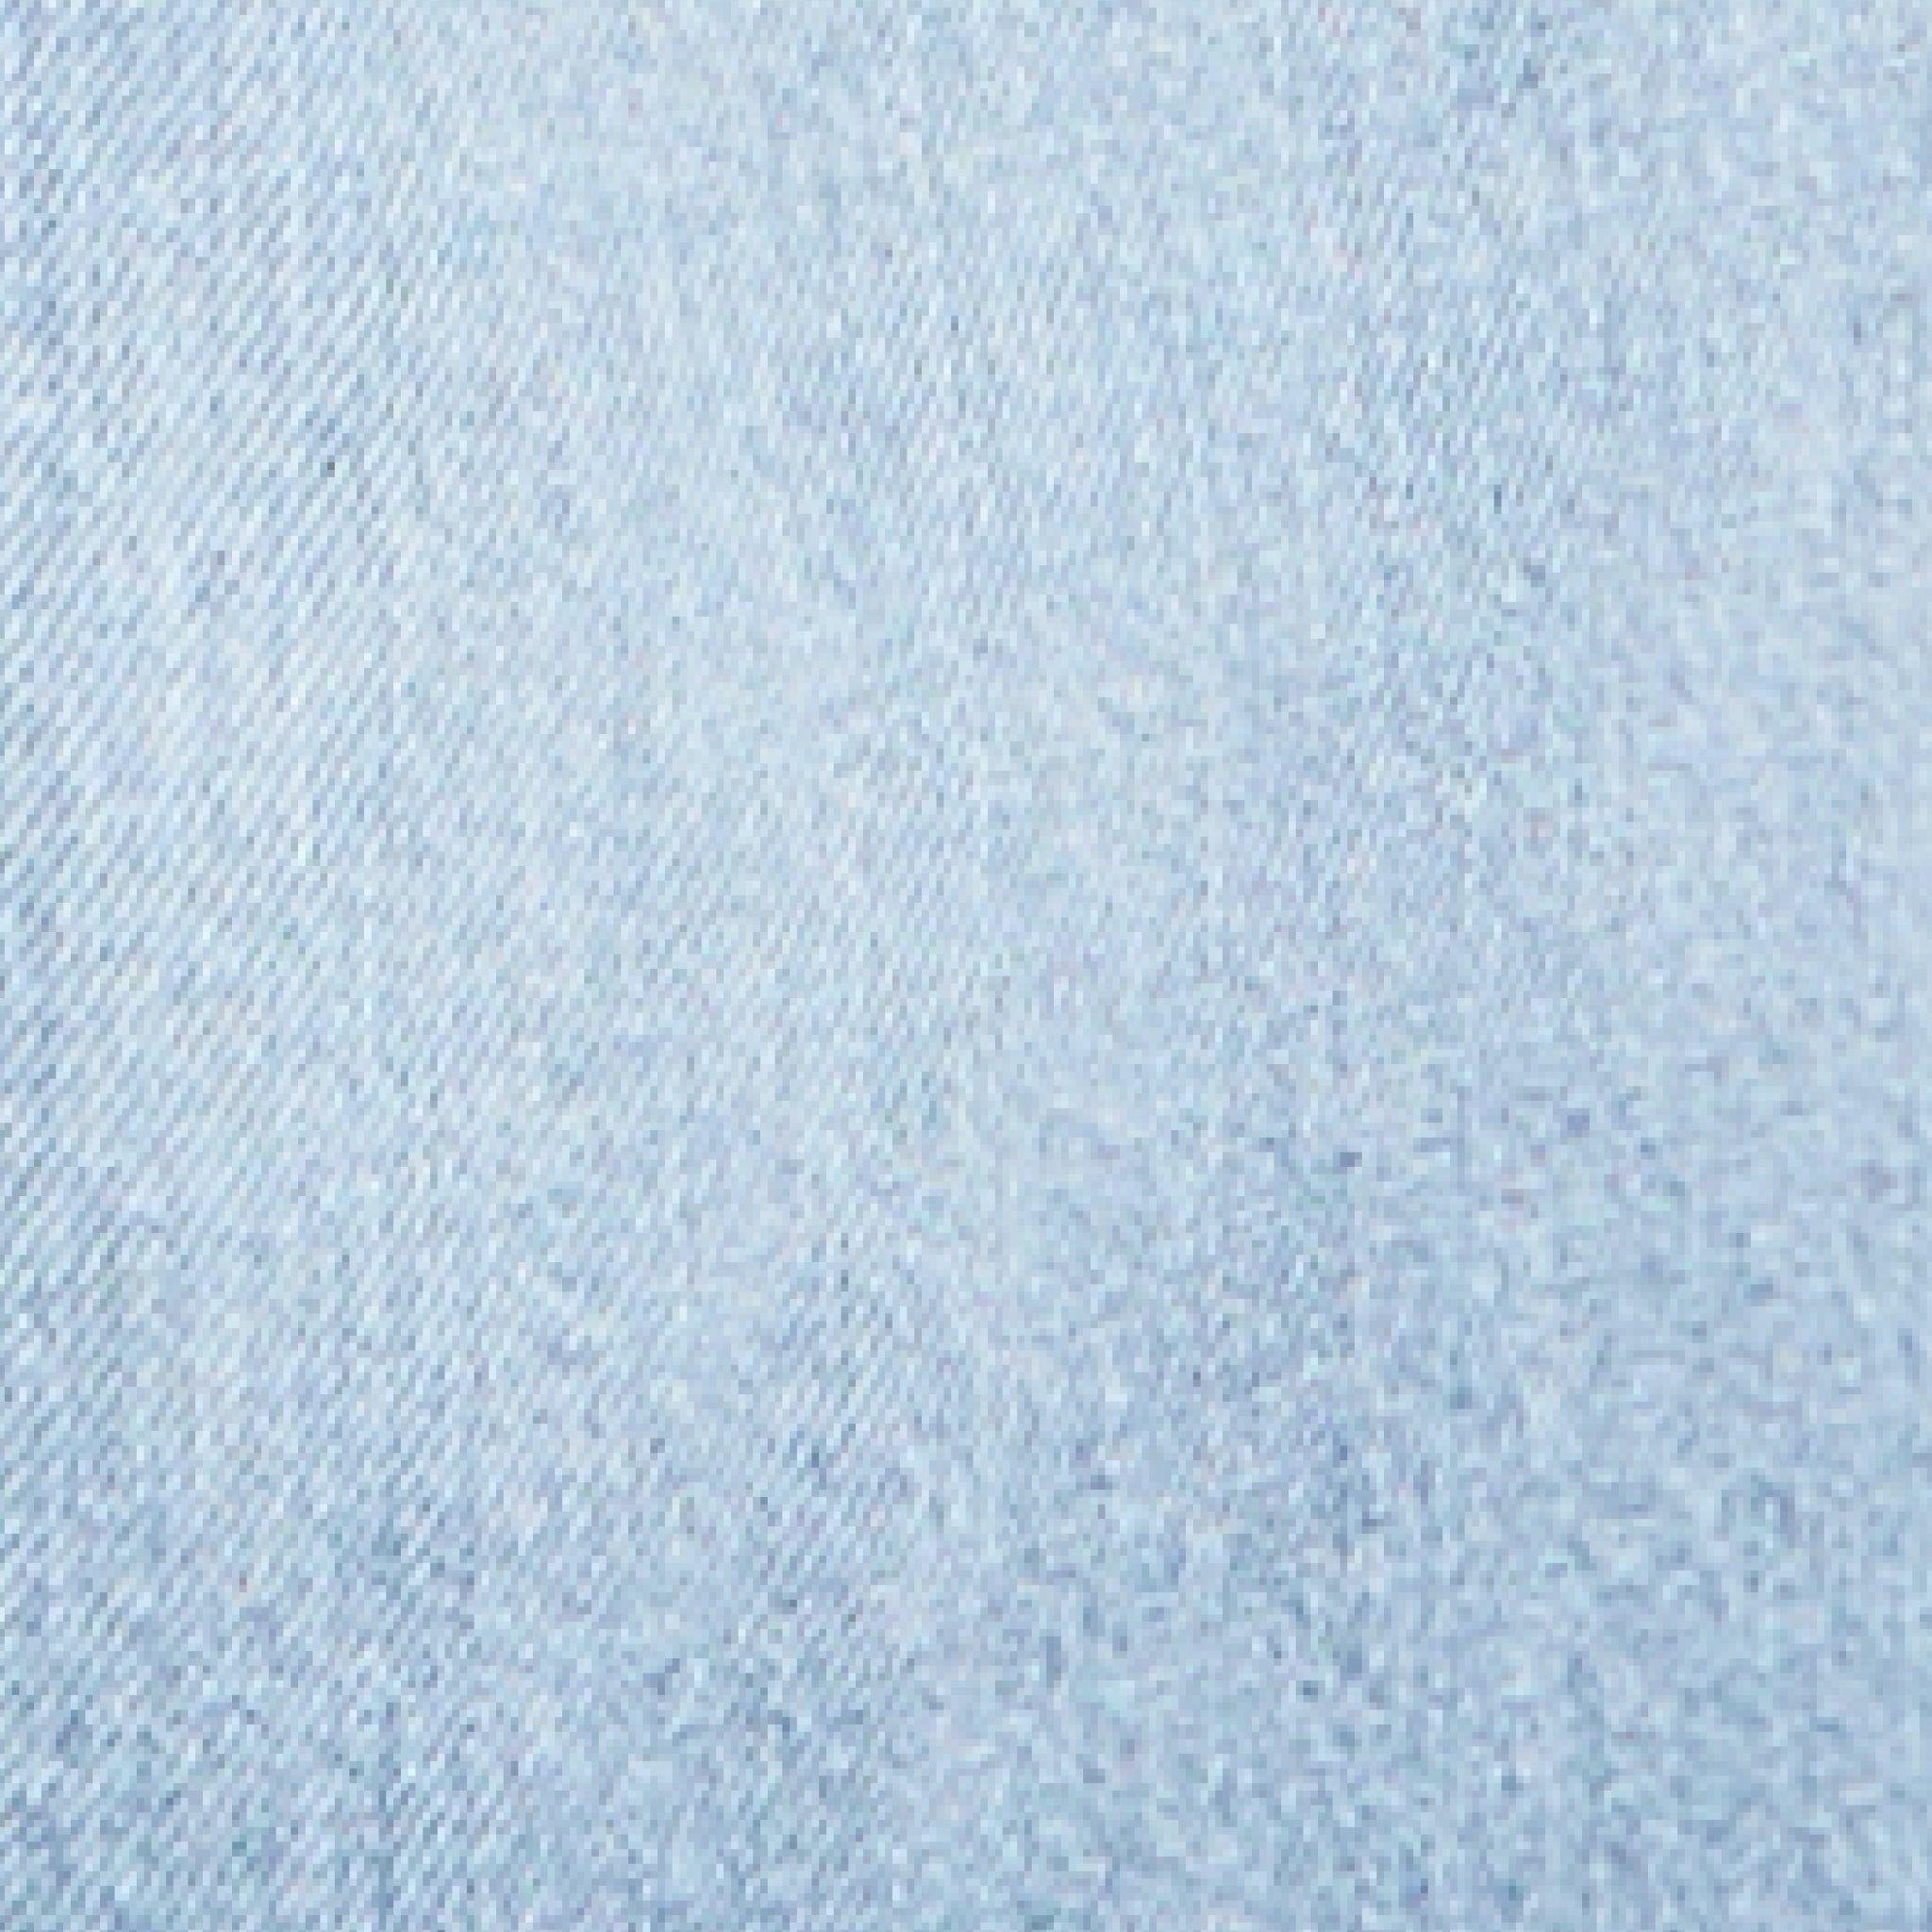 Denim Overalls - Pale Blue